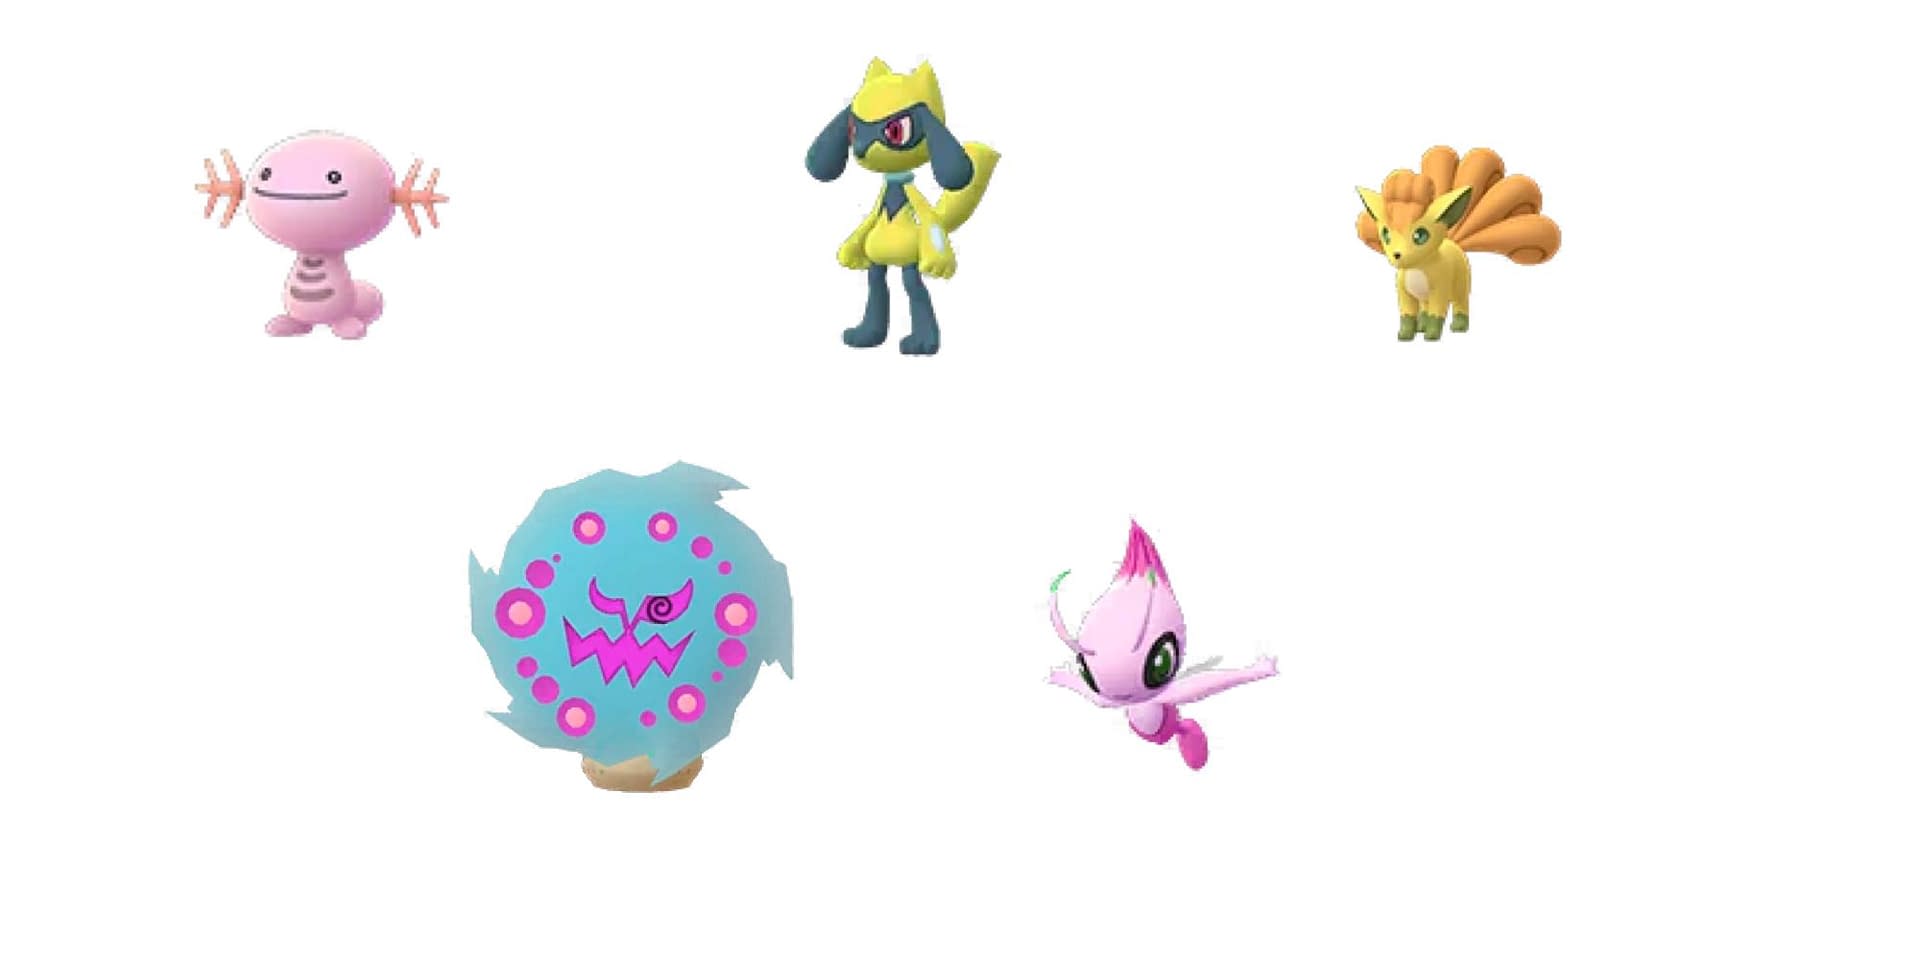 Ultra-rare shiny Pikachu released in Pokémon Go